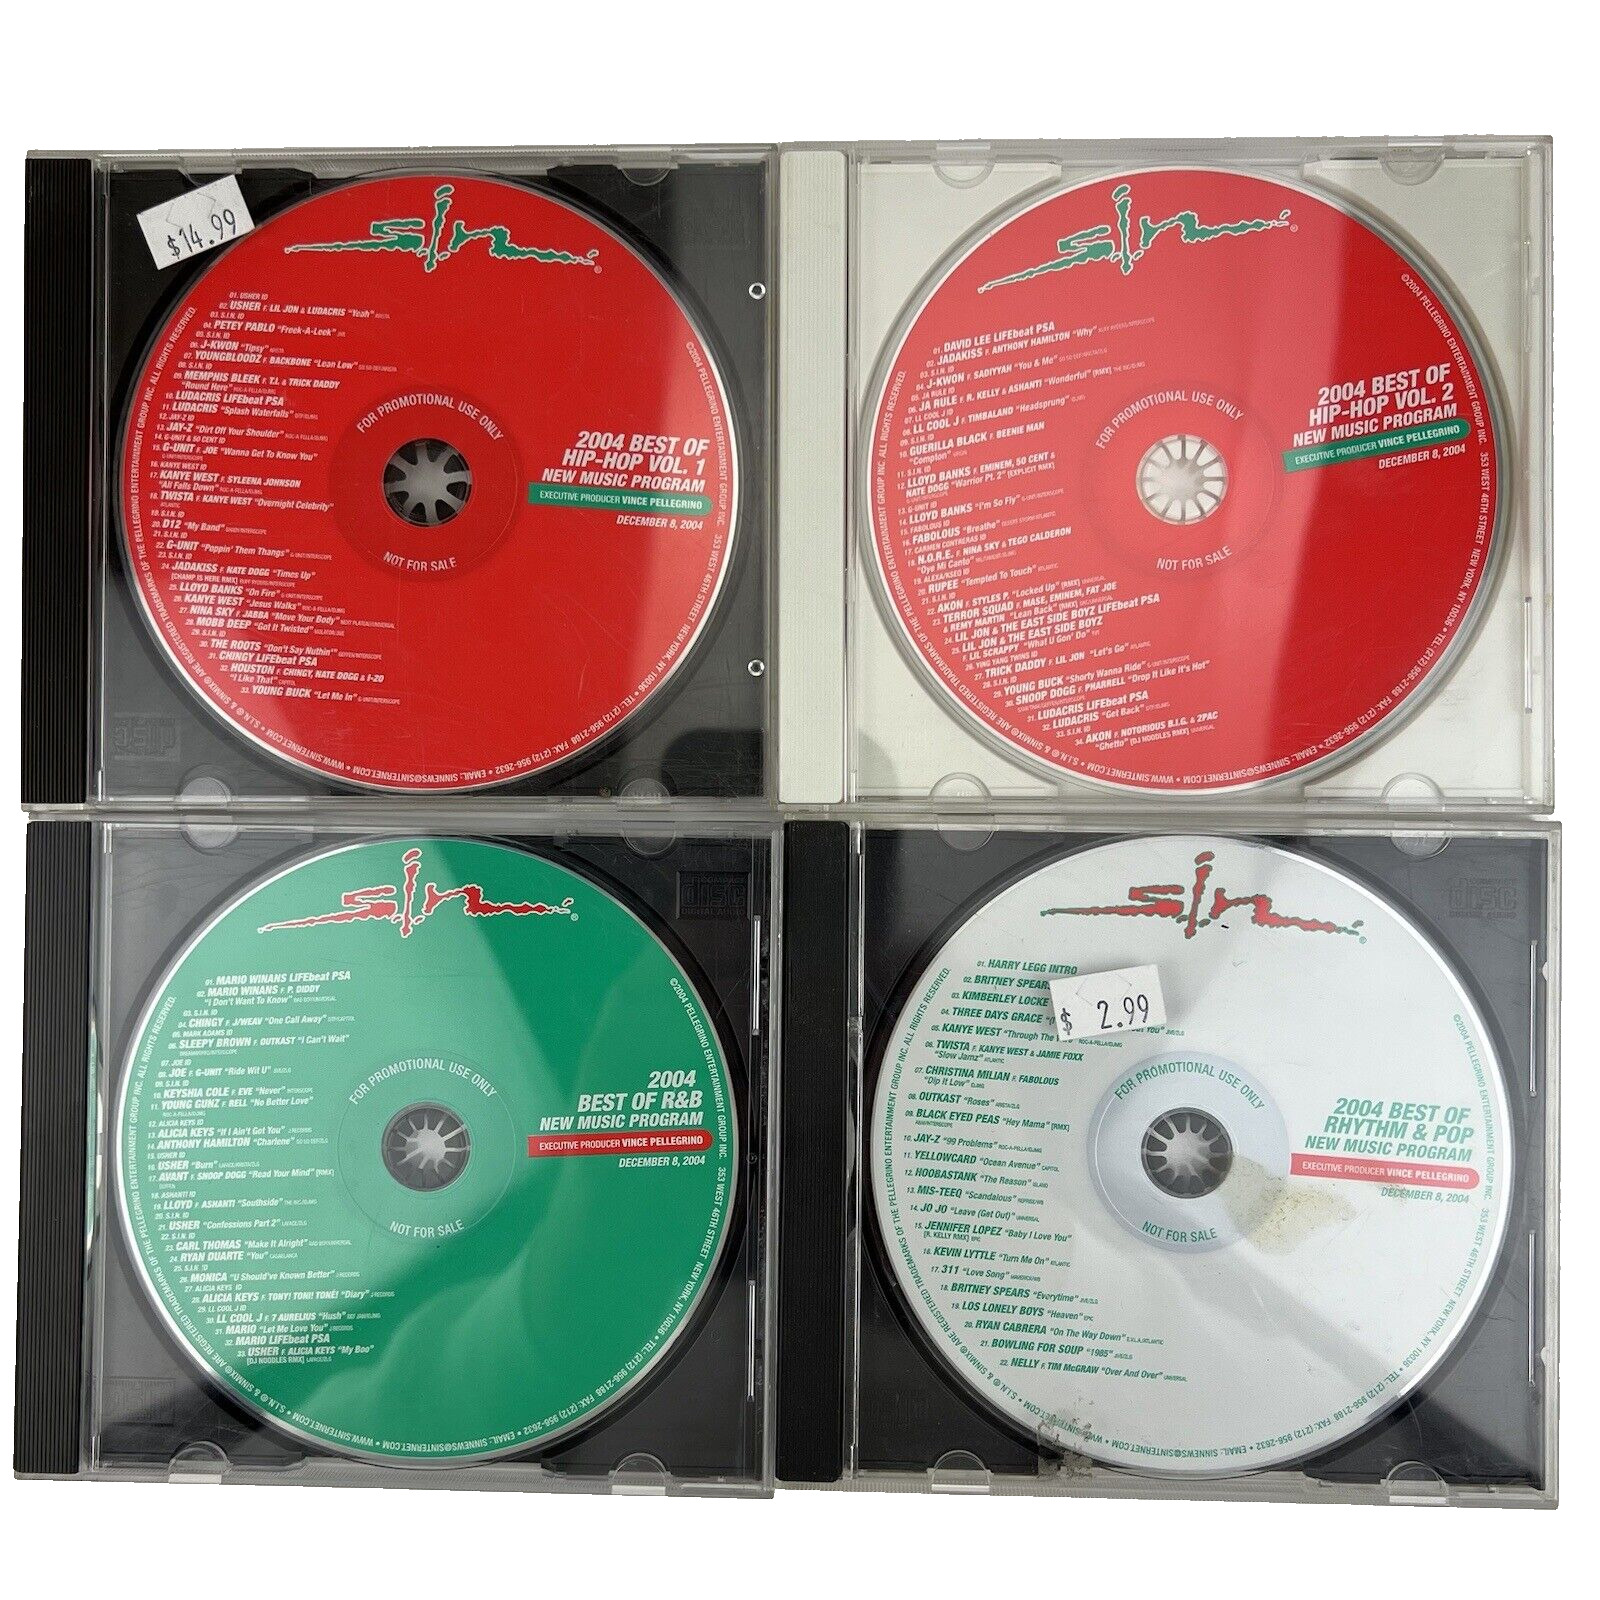 Lot of 4x RARE 2004 PROMO CDs - S.I.N. New music program - Best of Hip-Hop, R+B